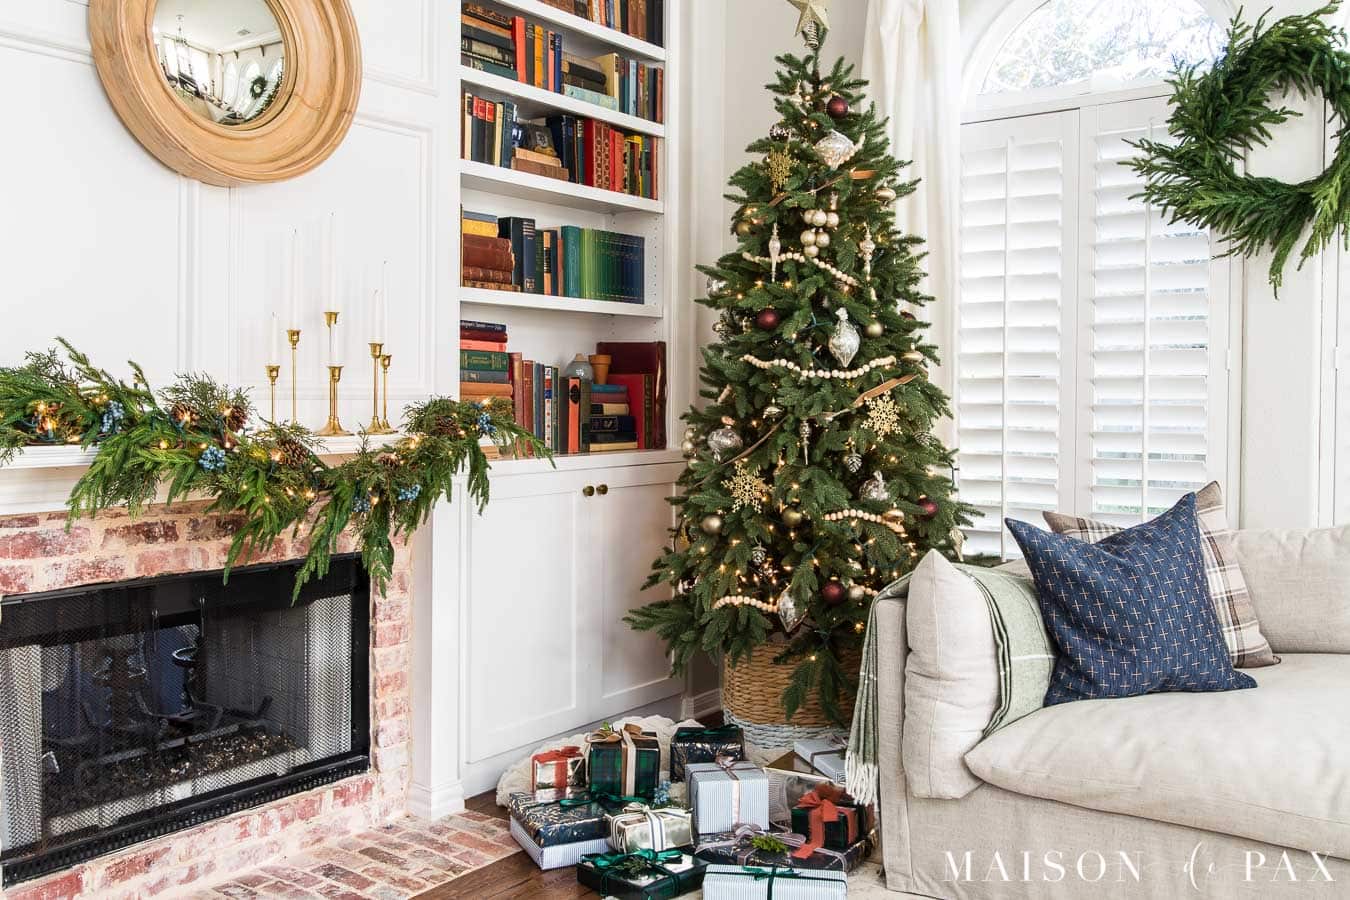 Christmas tree, fireplace, and mantel